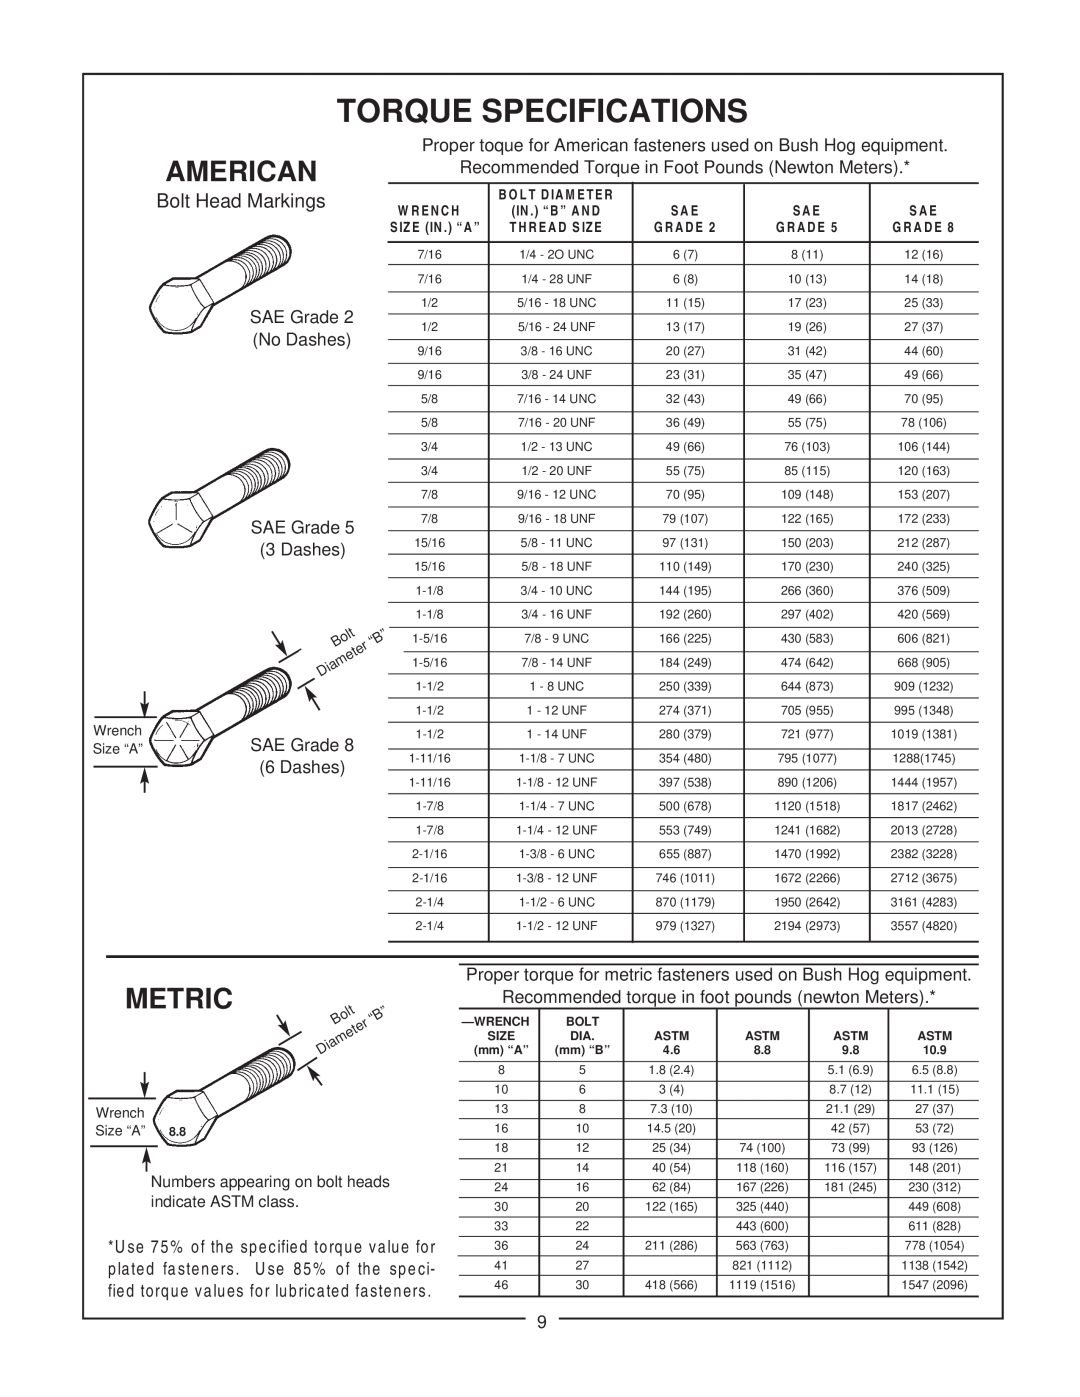 Bush Hog BBC 48 Torque Specifications, American, Metric, Bolt Head Markings, W R E N C H, S Iz E In . “A ”, Wrench, Size 